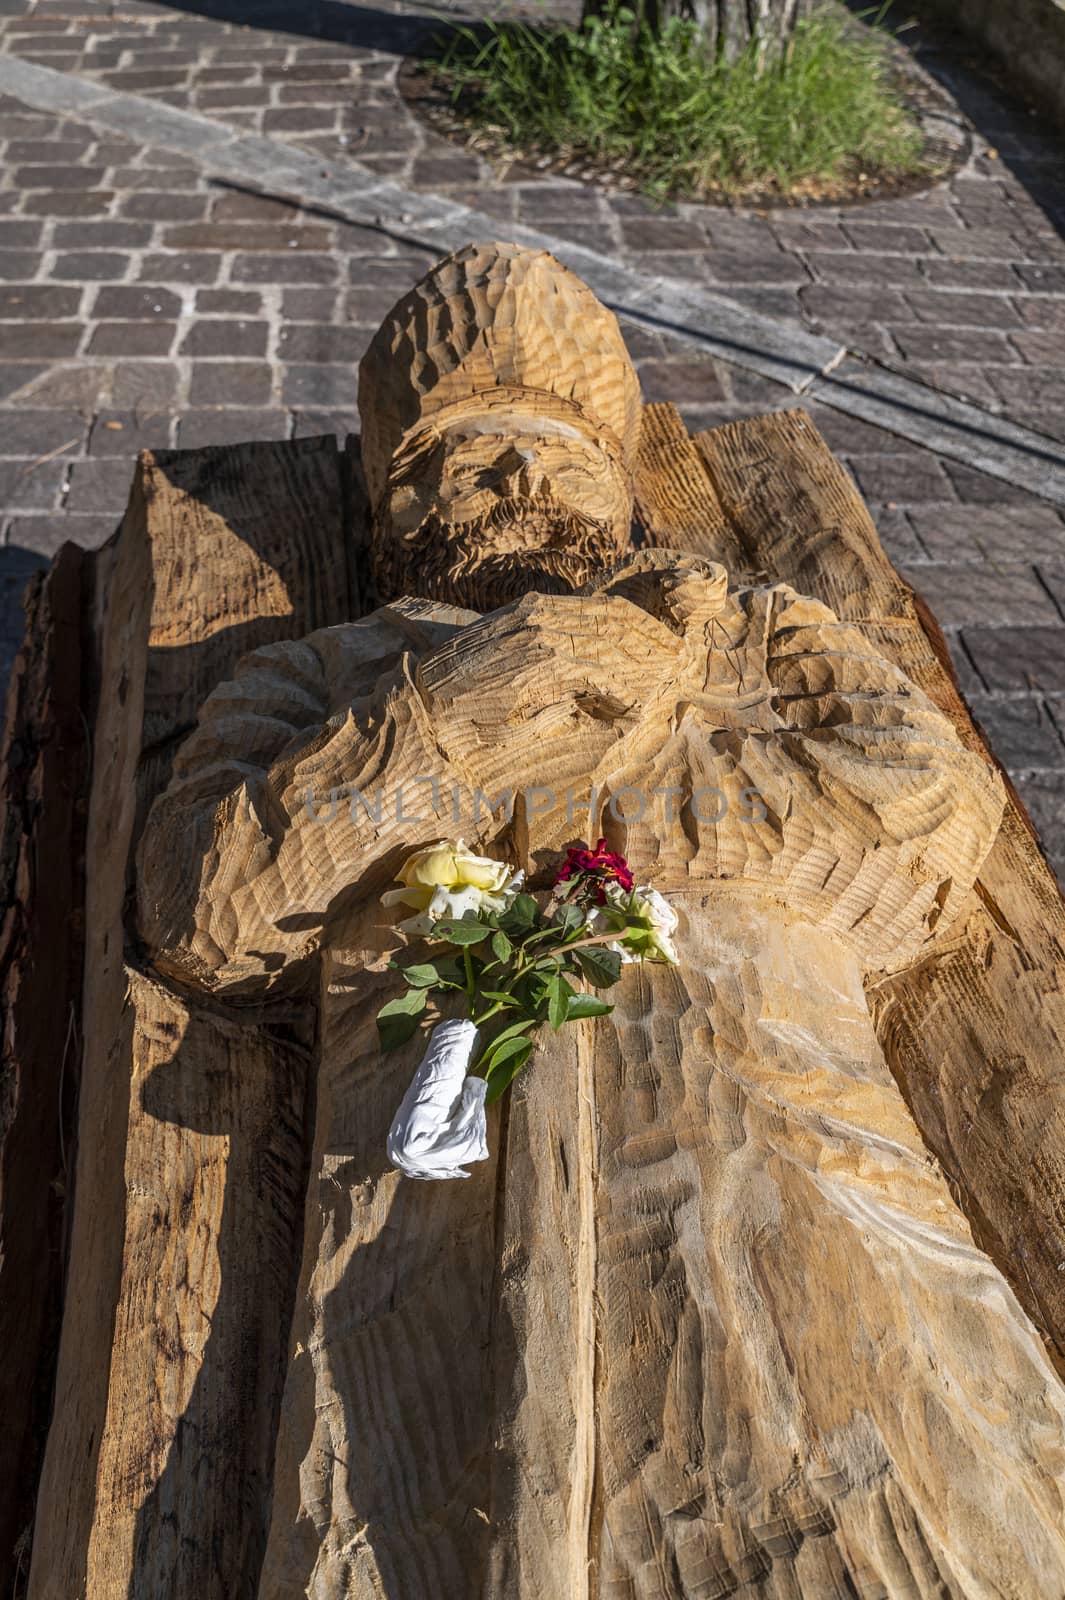 terni,italy october 22 2020:carved wooden statue of Saint Valentine, patron saint of terni